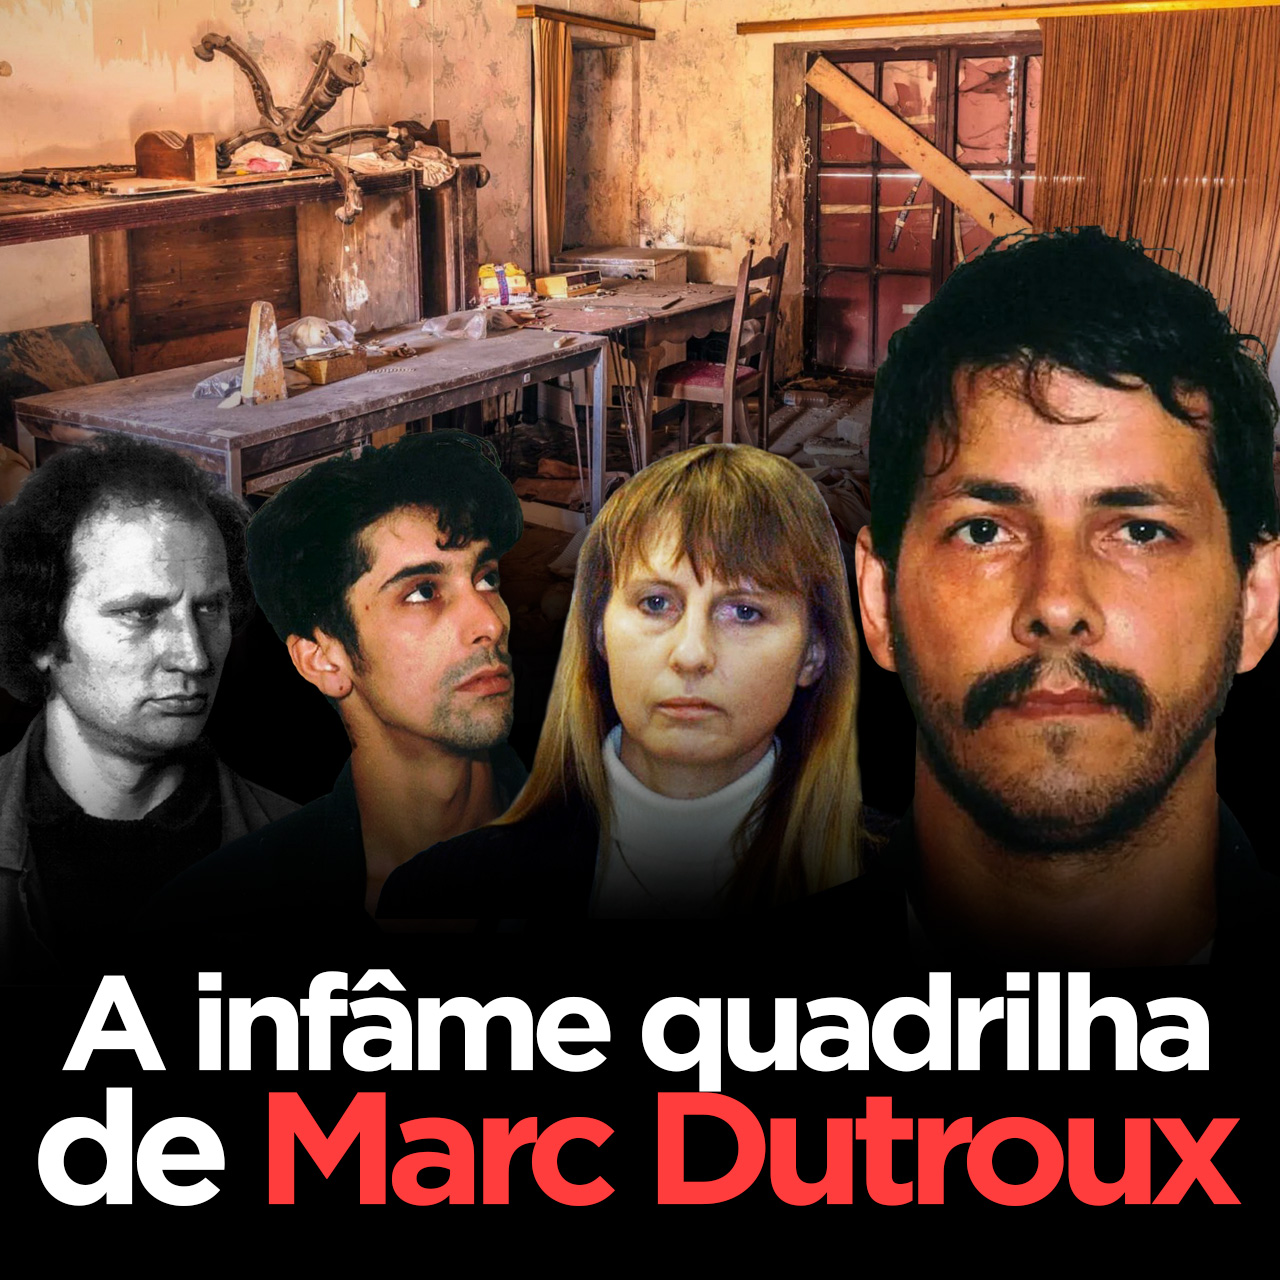 A quadrilha estupr4d0r4 e Serial Killer de Marc Dutroux